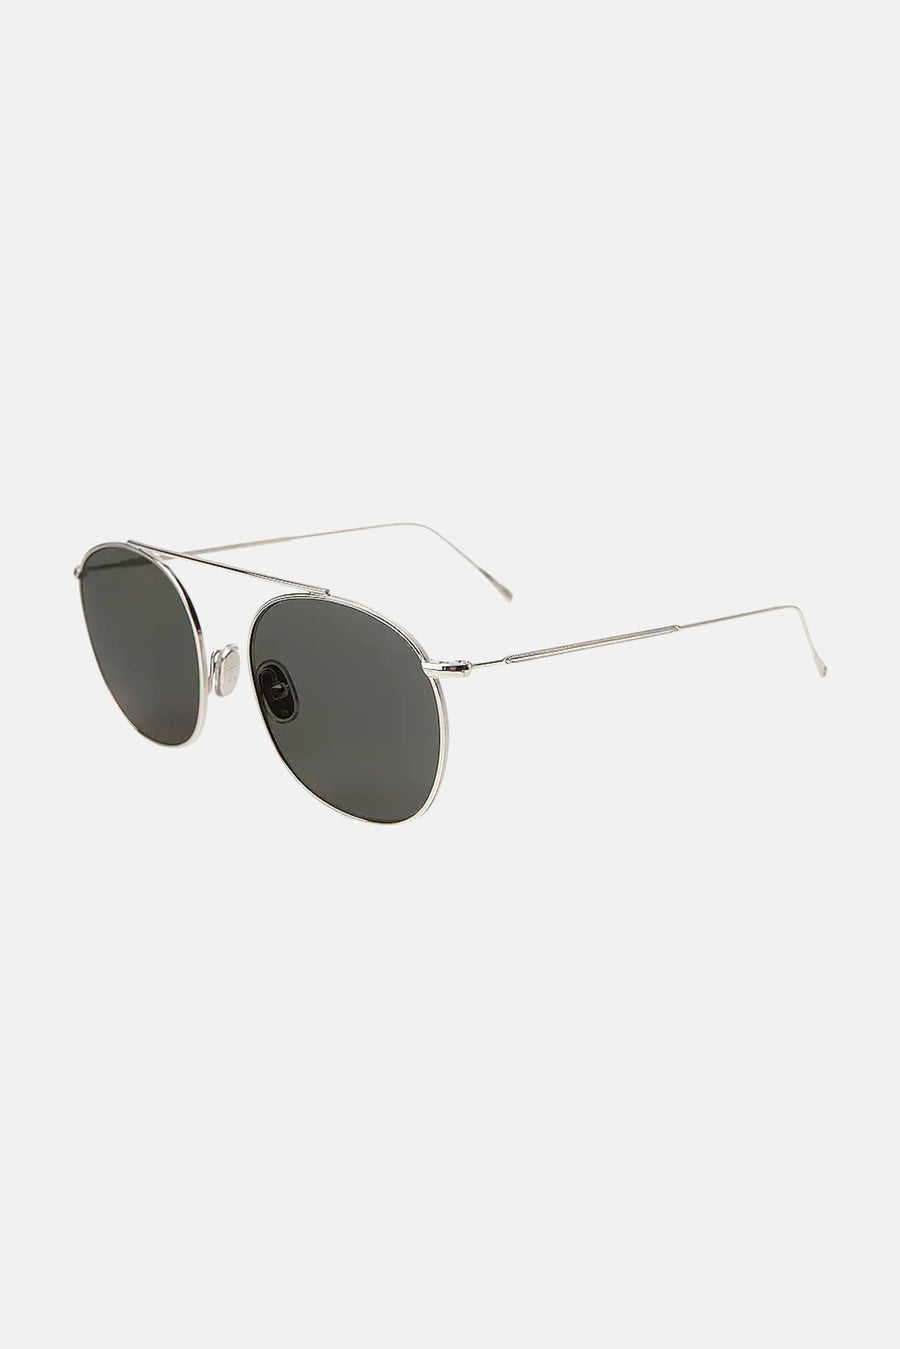 Mykonos II Sunglasses Silver/Olive - blueandcream